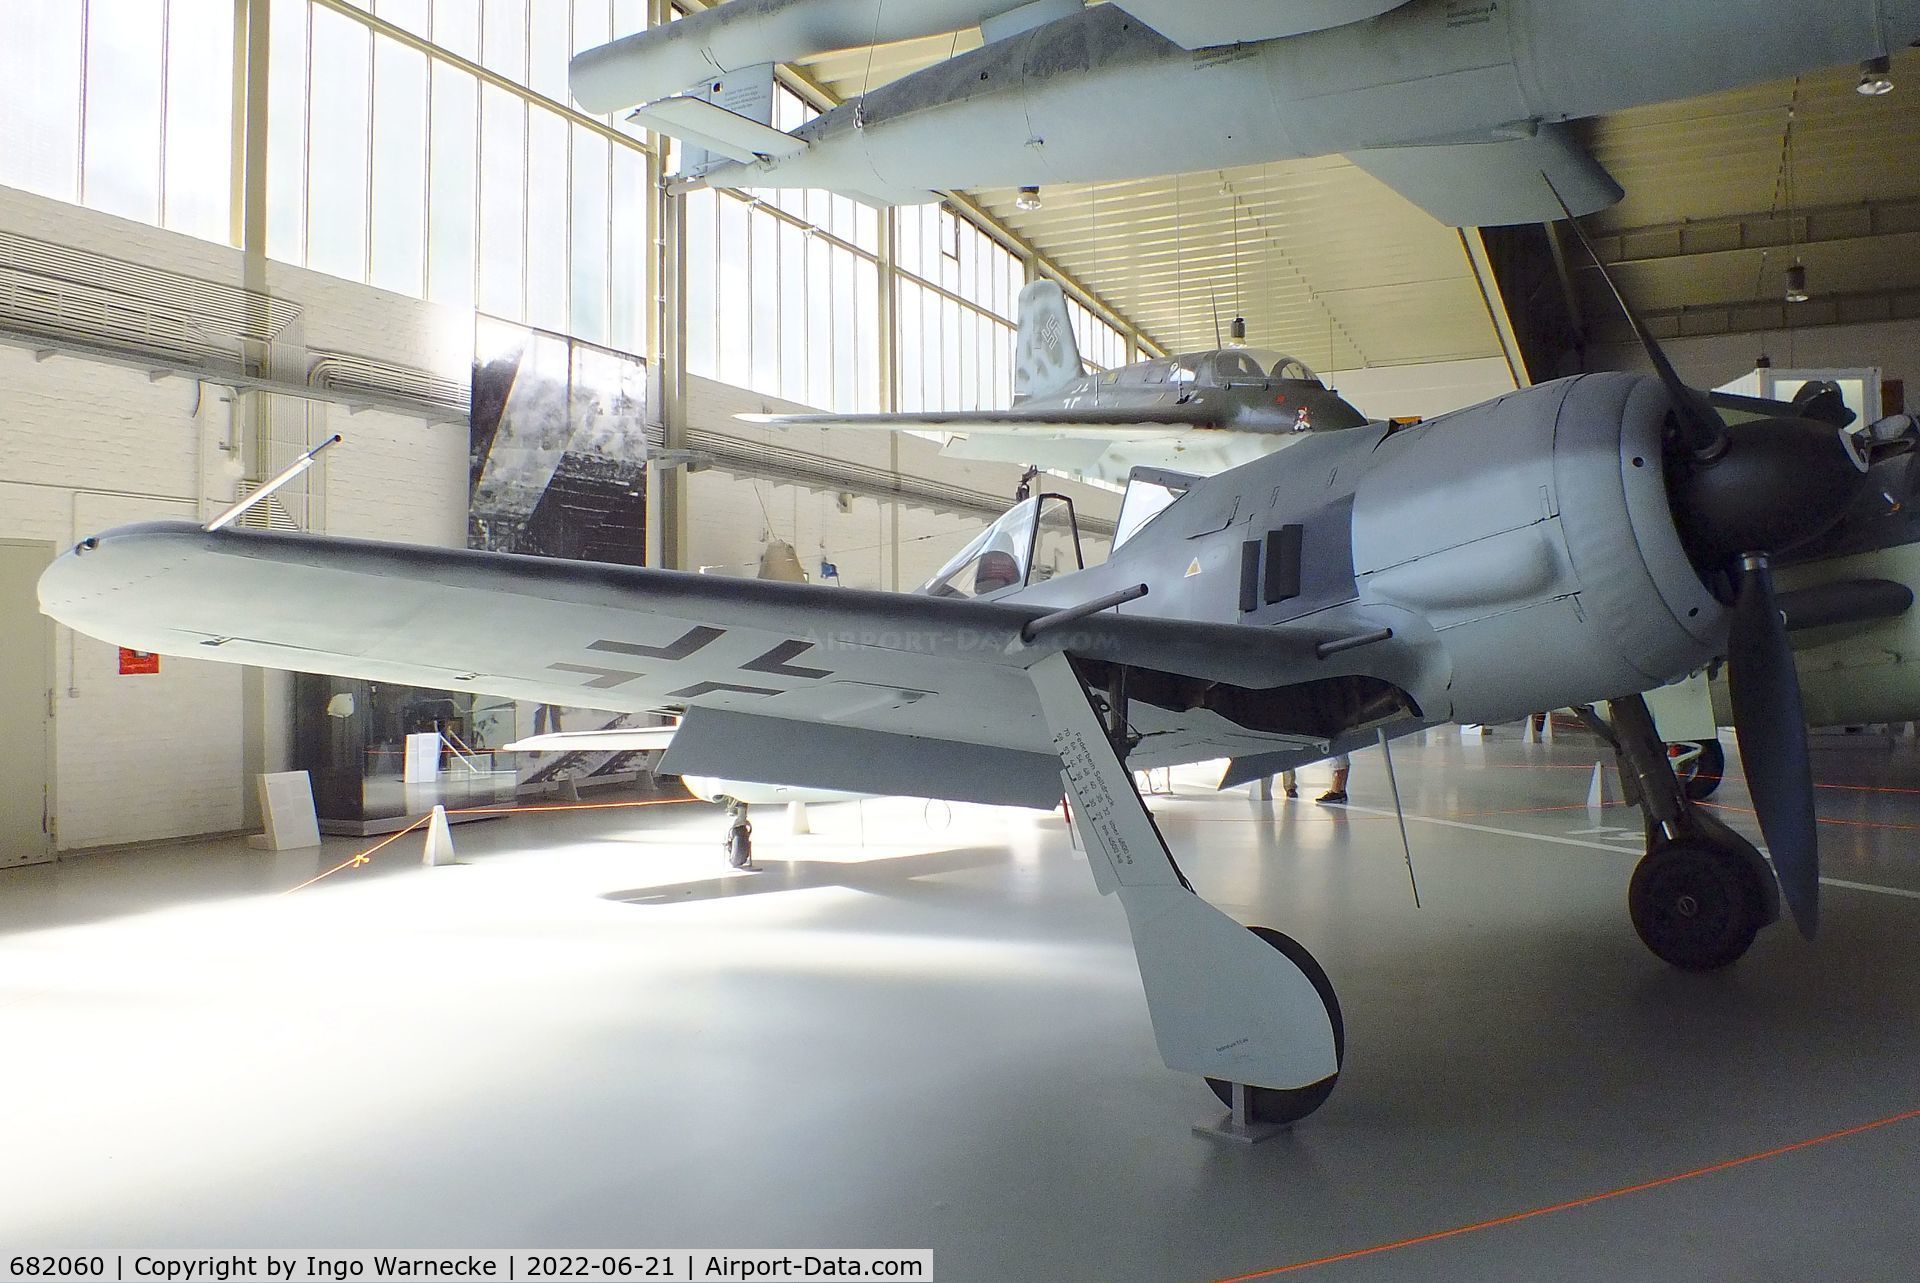 682060, Focke-Wulf Fw-190A-8 C/N 682060, Focke-Wulf Fw 190A-8 at the MHM Berlin-Gatow (aka Luftwaffenmuseum, German Air Force Museum)